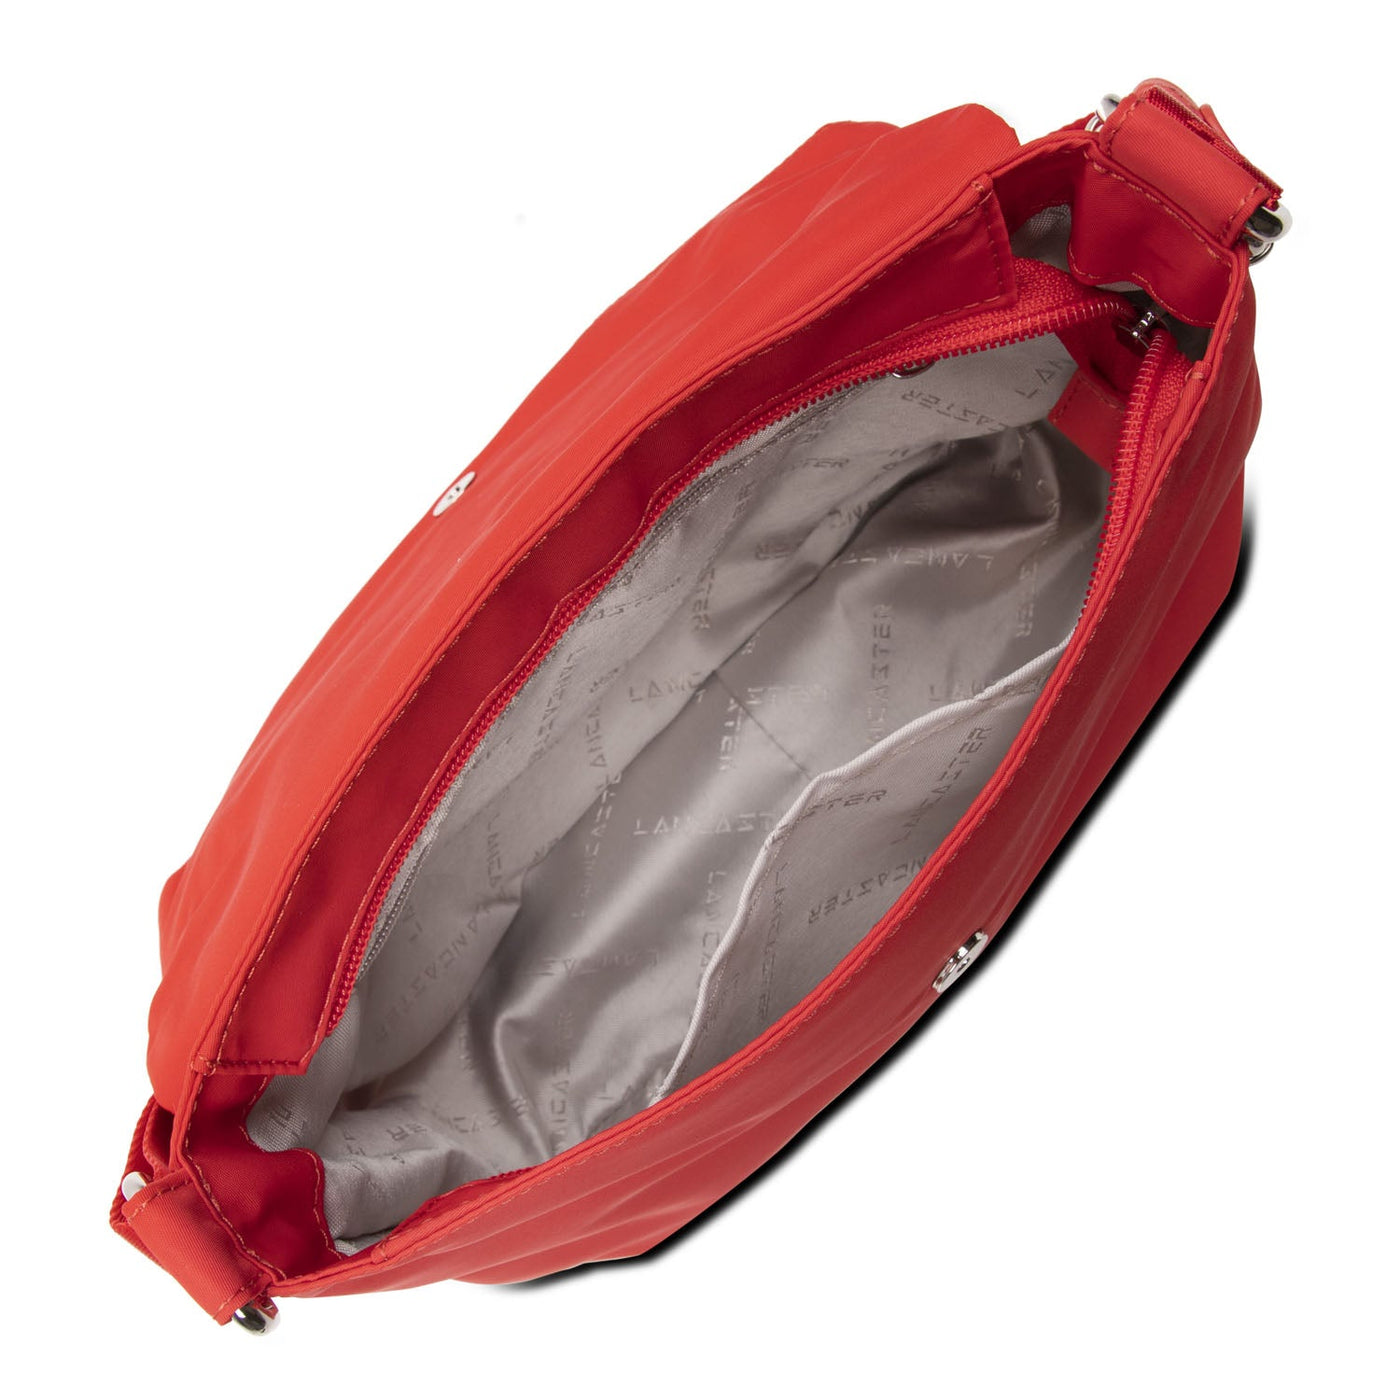 shoulder bag - basic pompon #couleur_corail